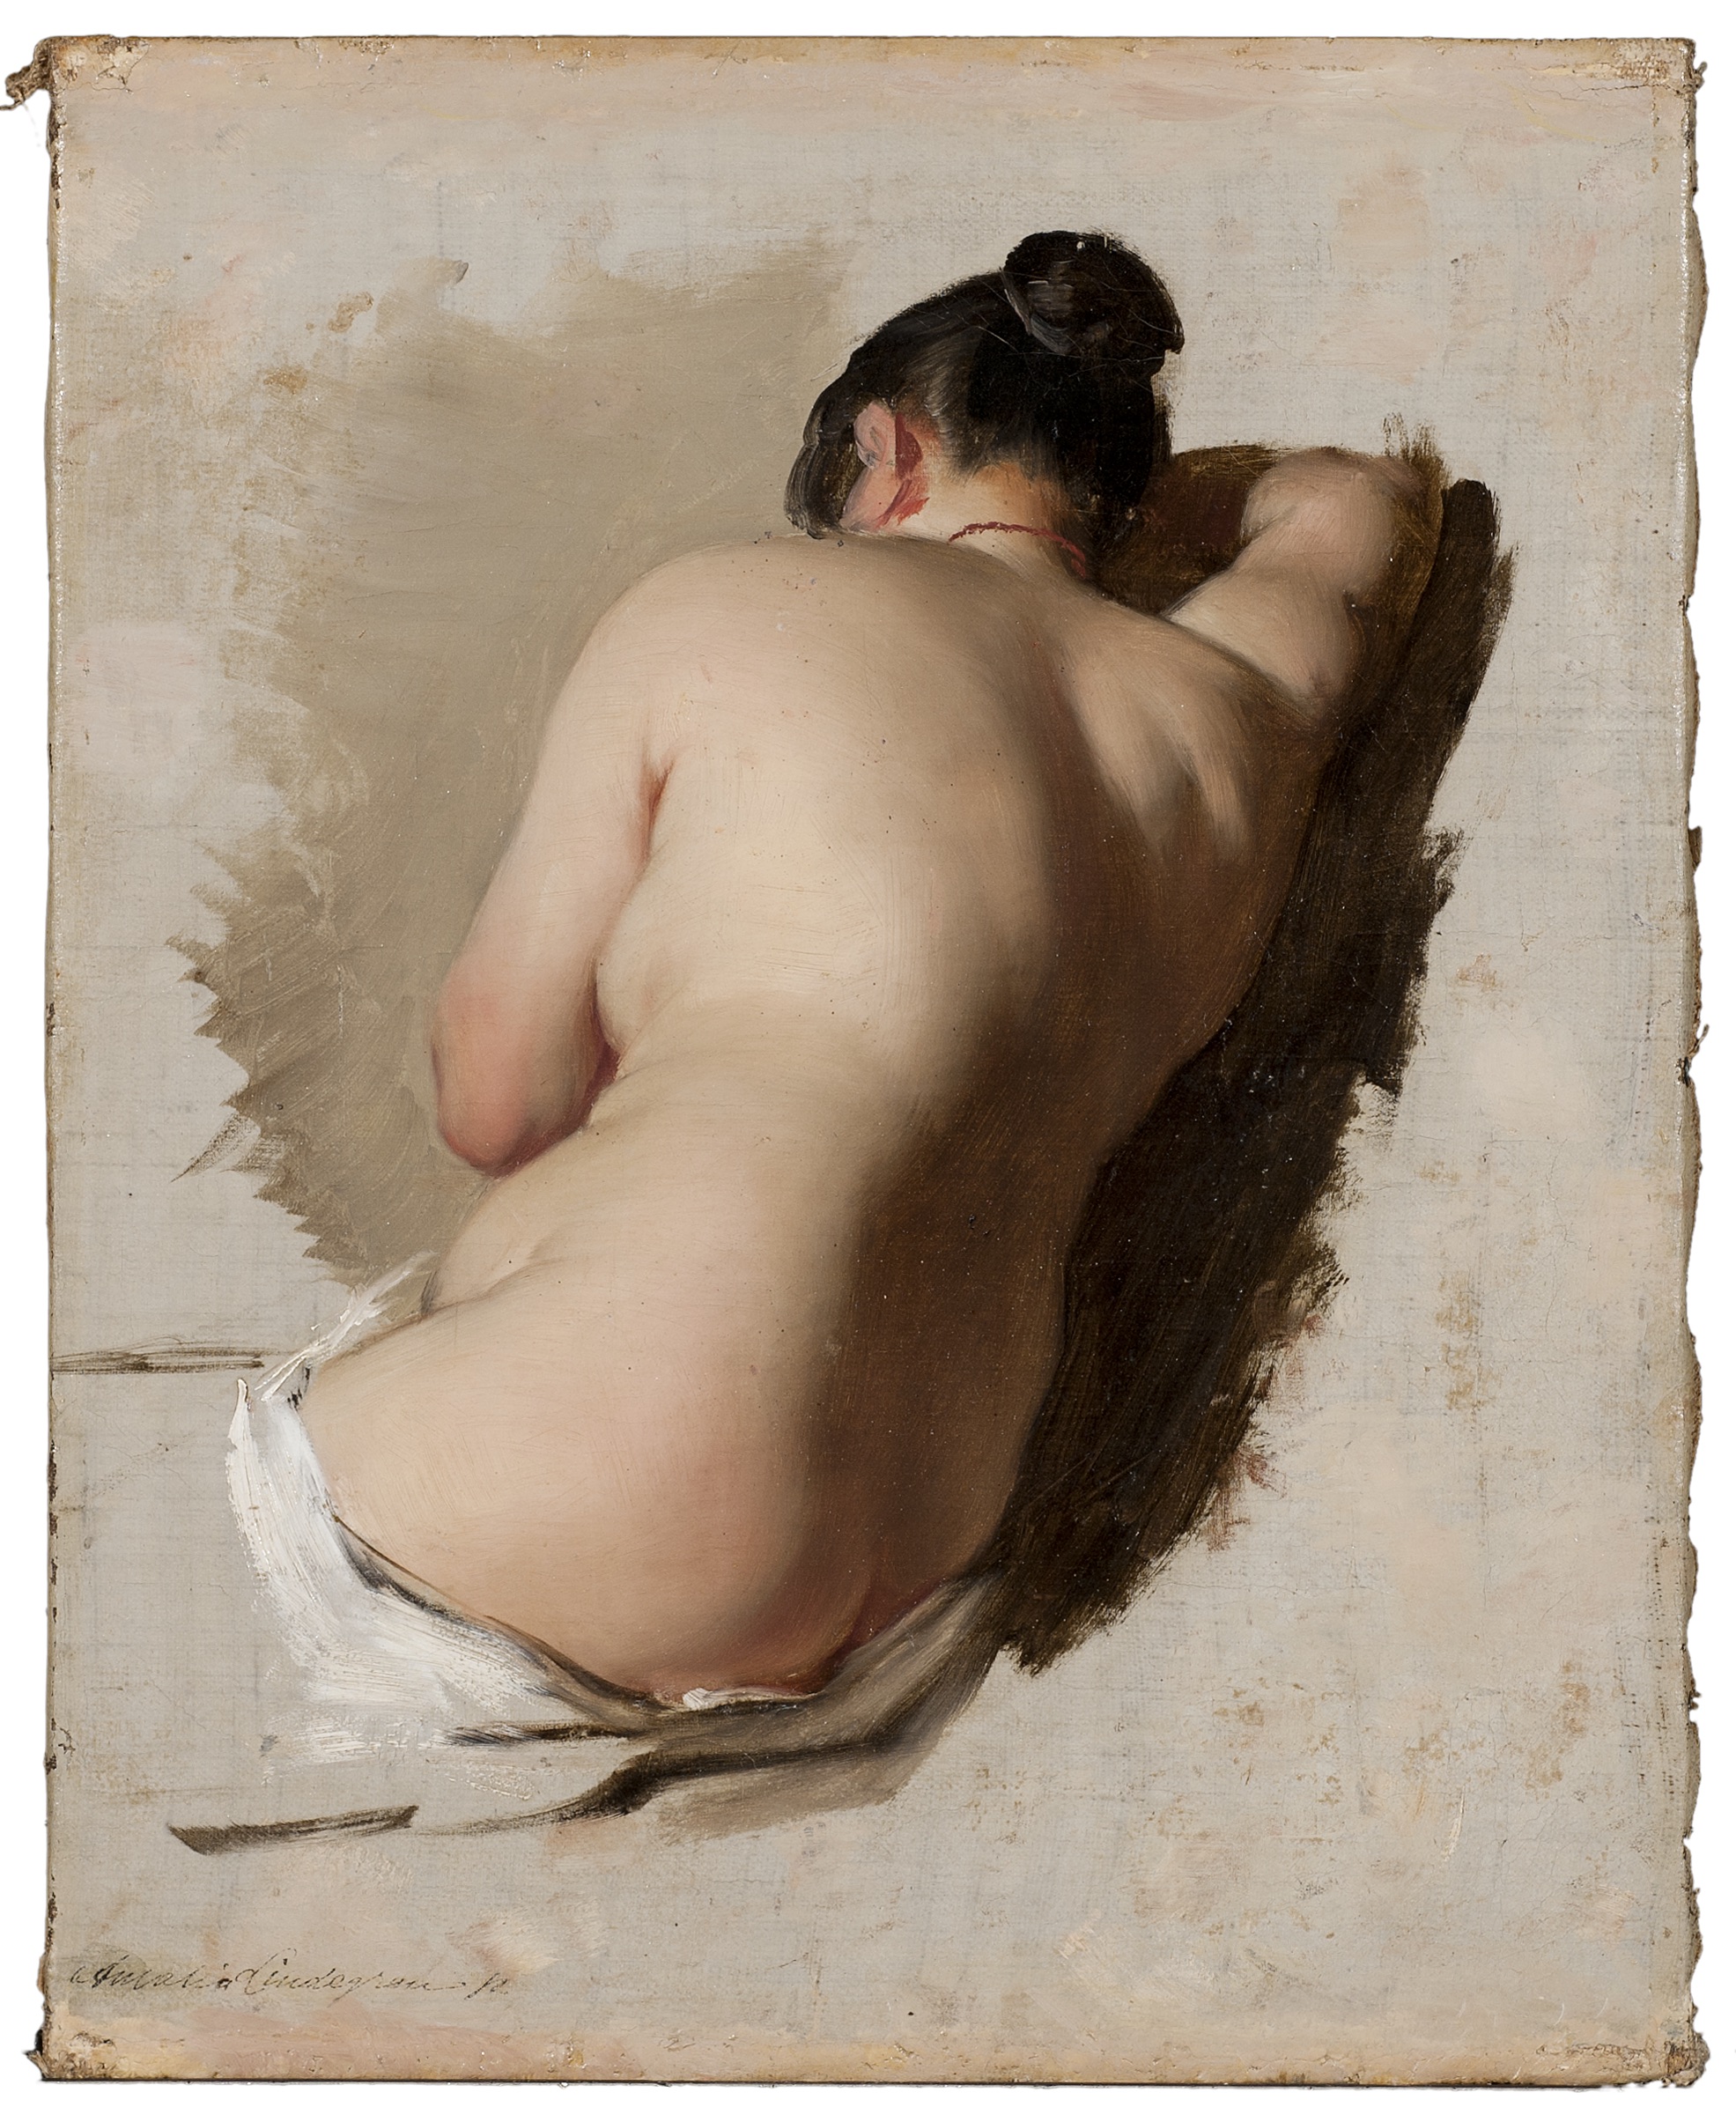 Nude Study by Amalia Lindegren - 1850 - 33,5 x 26,5 cm Nationalmuseum